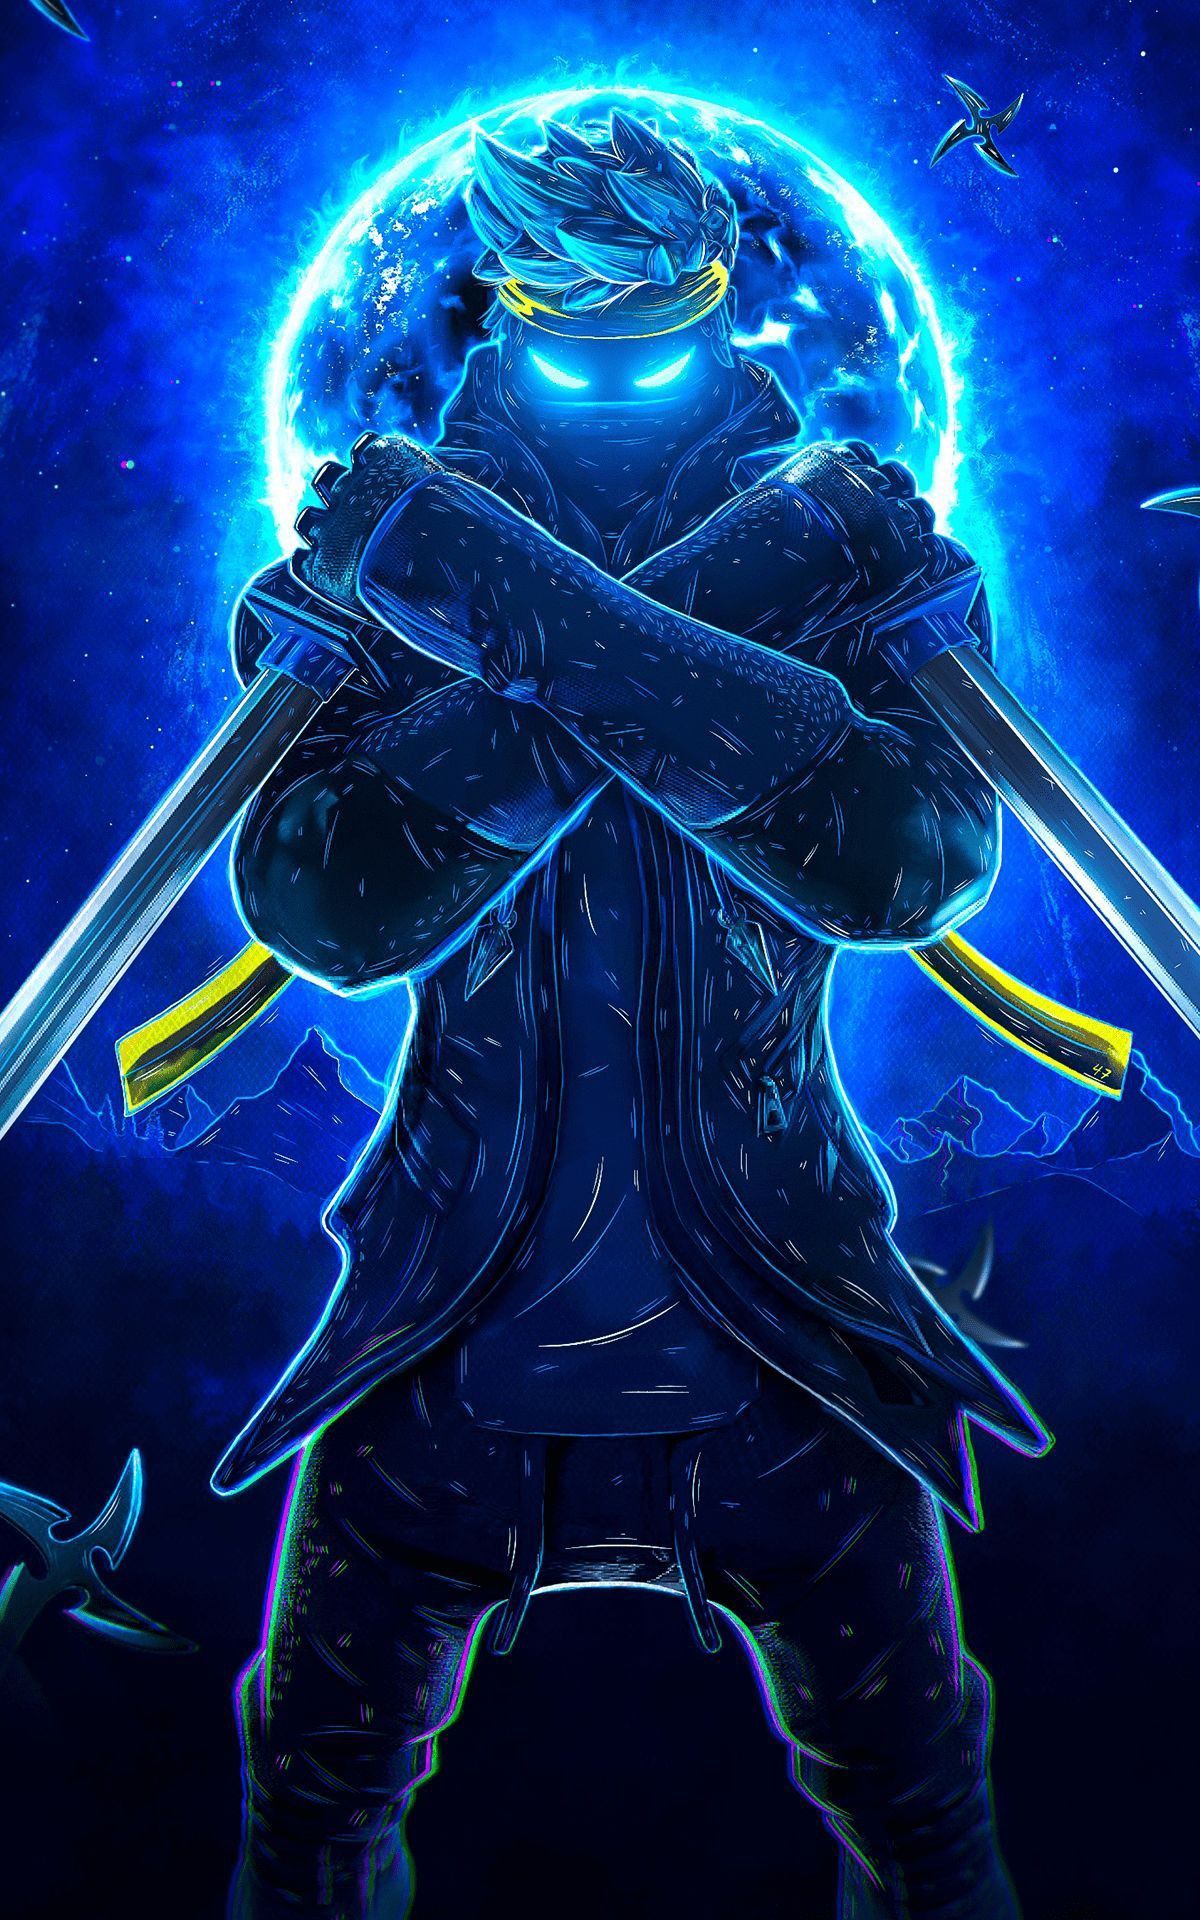 Blue ninja fortnite art ideas. fortnite, ninja, gaming wallpaper